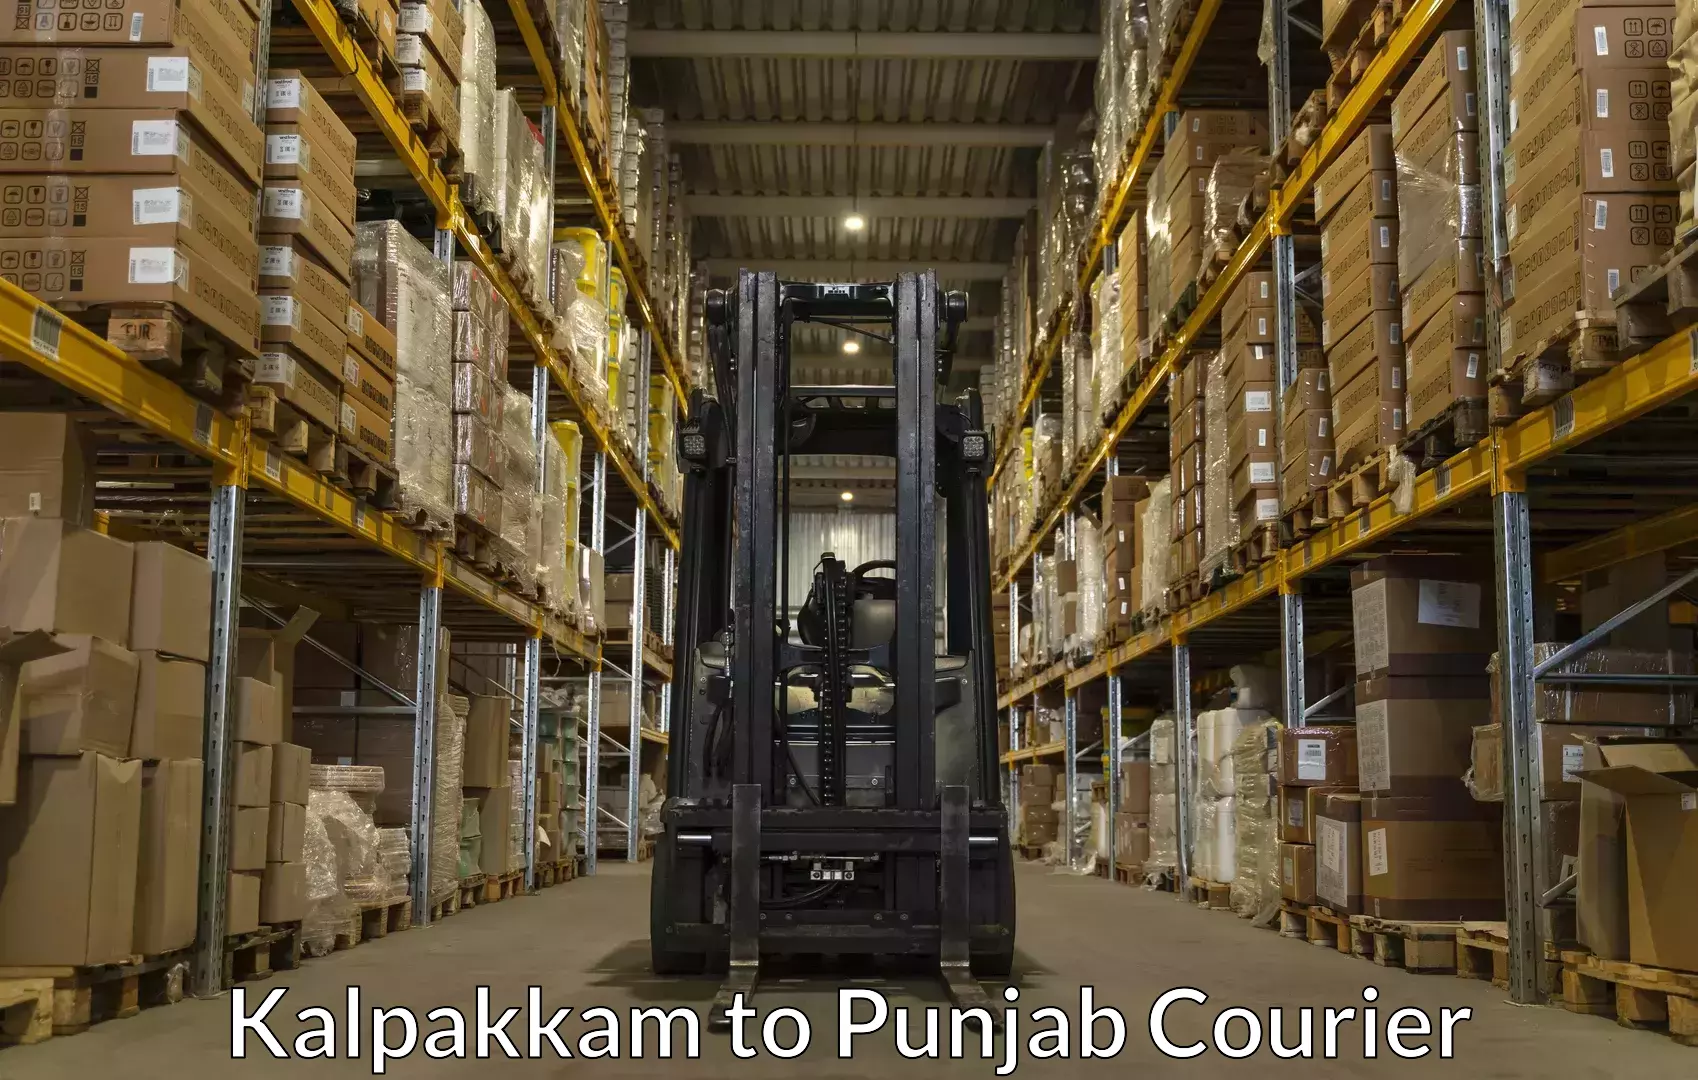 Luggage shipment specialists Kalpakkam to Mohali